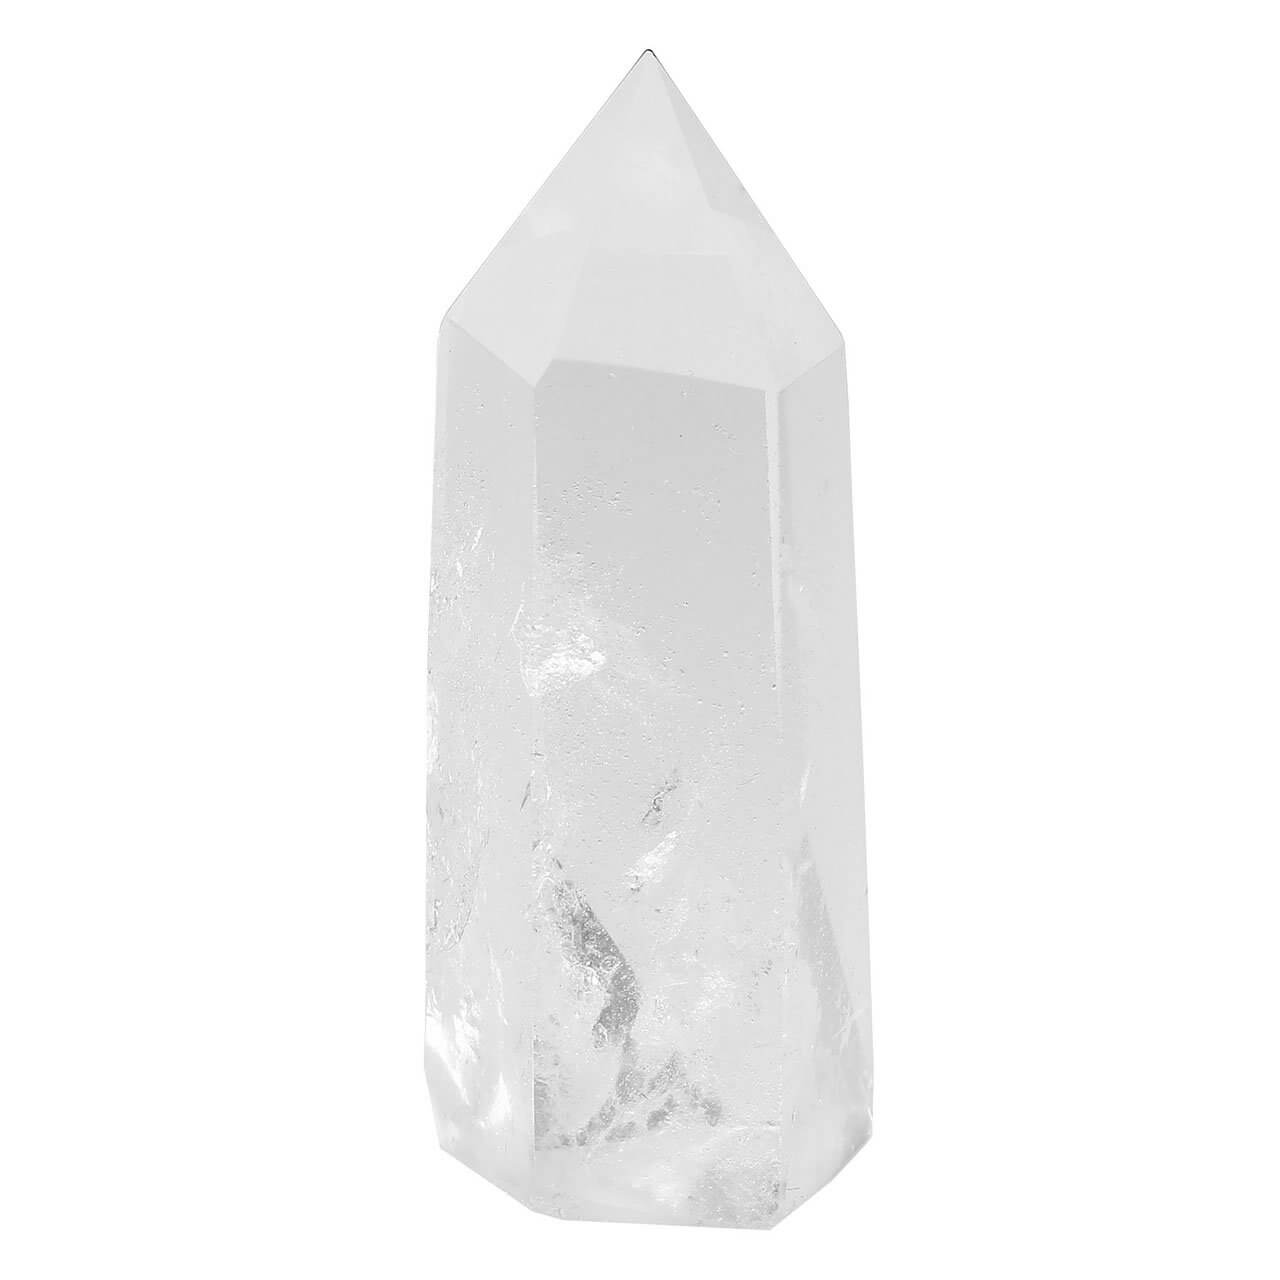 jovivi clear crystal quartz point wand